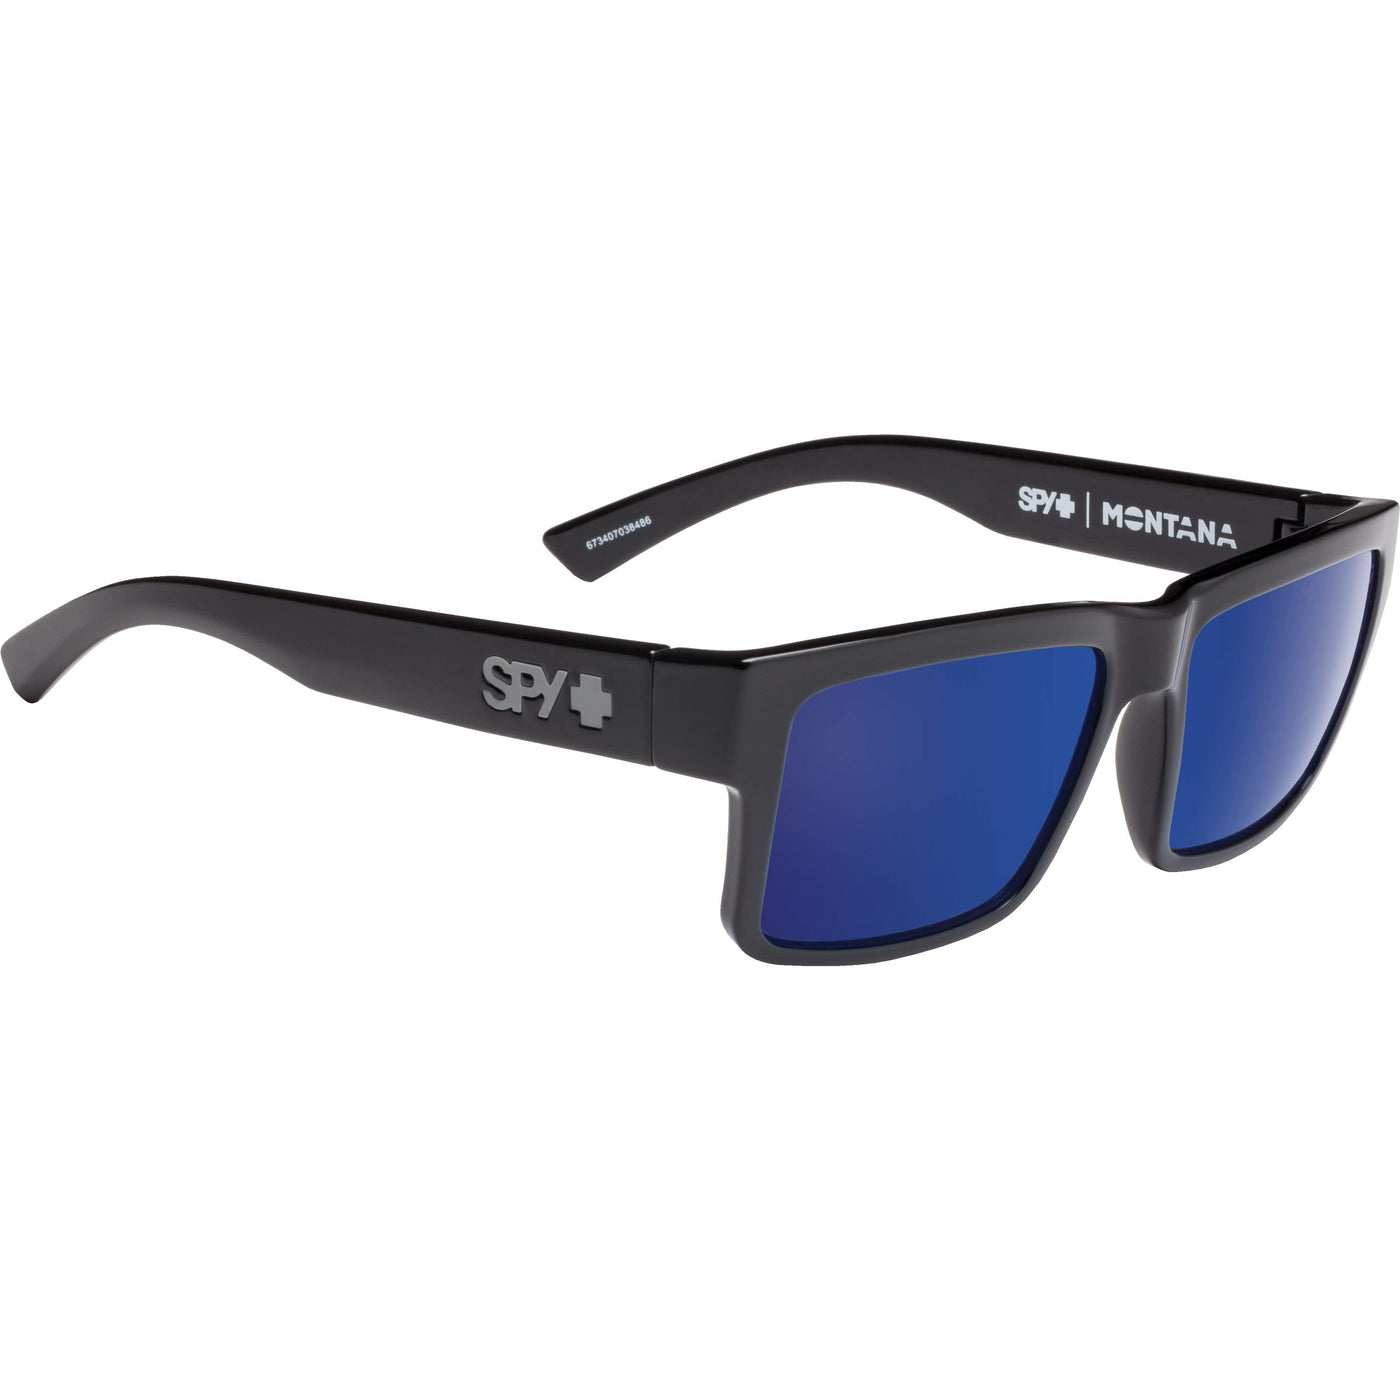 spy happy lens montana sunglasses - dark blue